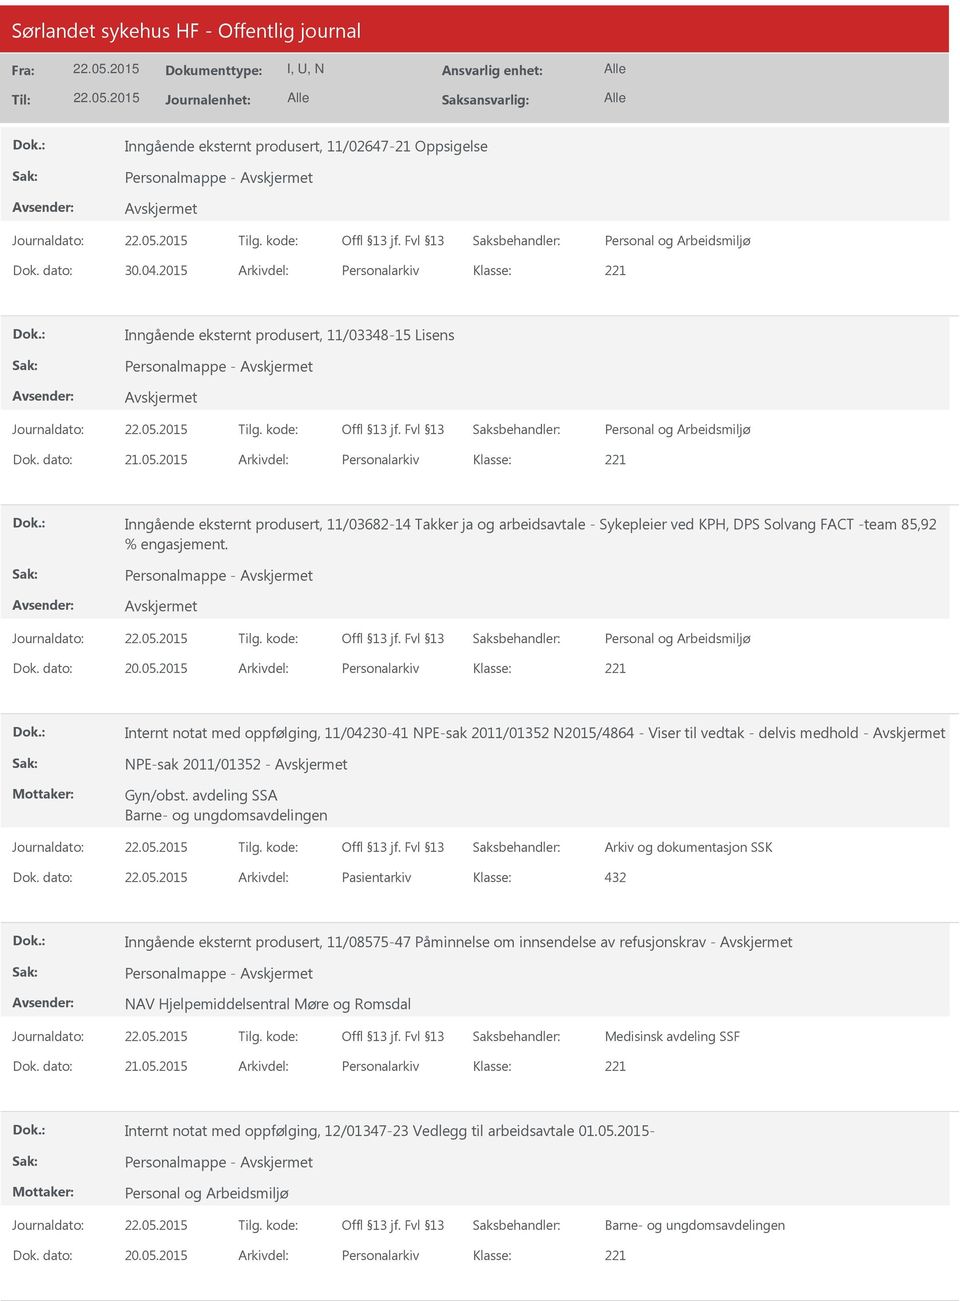 2015 Arkivdel: Personalarkiv Internt notat med oppfølging, 11/00-41 NPE-sak 2011/01352 N2015/4864 - Viser til vedtak - delvis medhold - NPE-sak 2011/01352 - Gyn/obst.